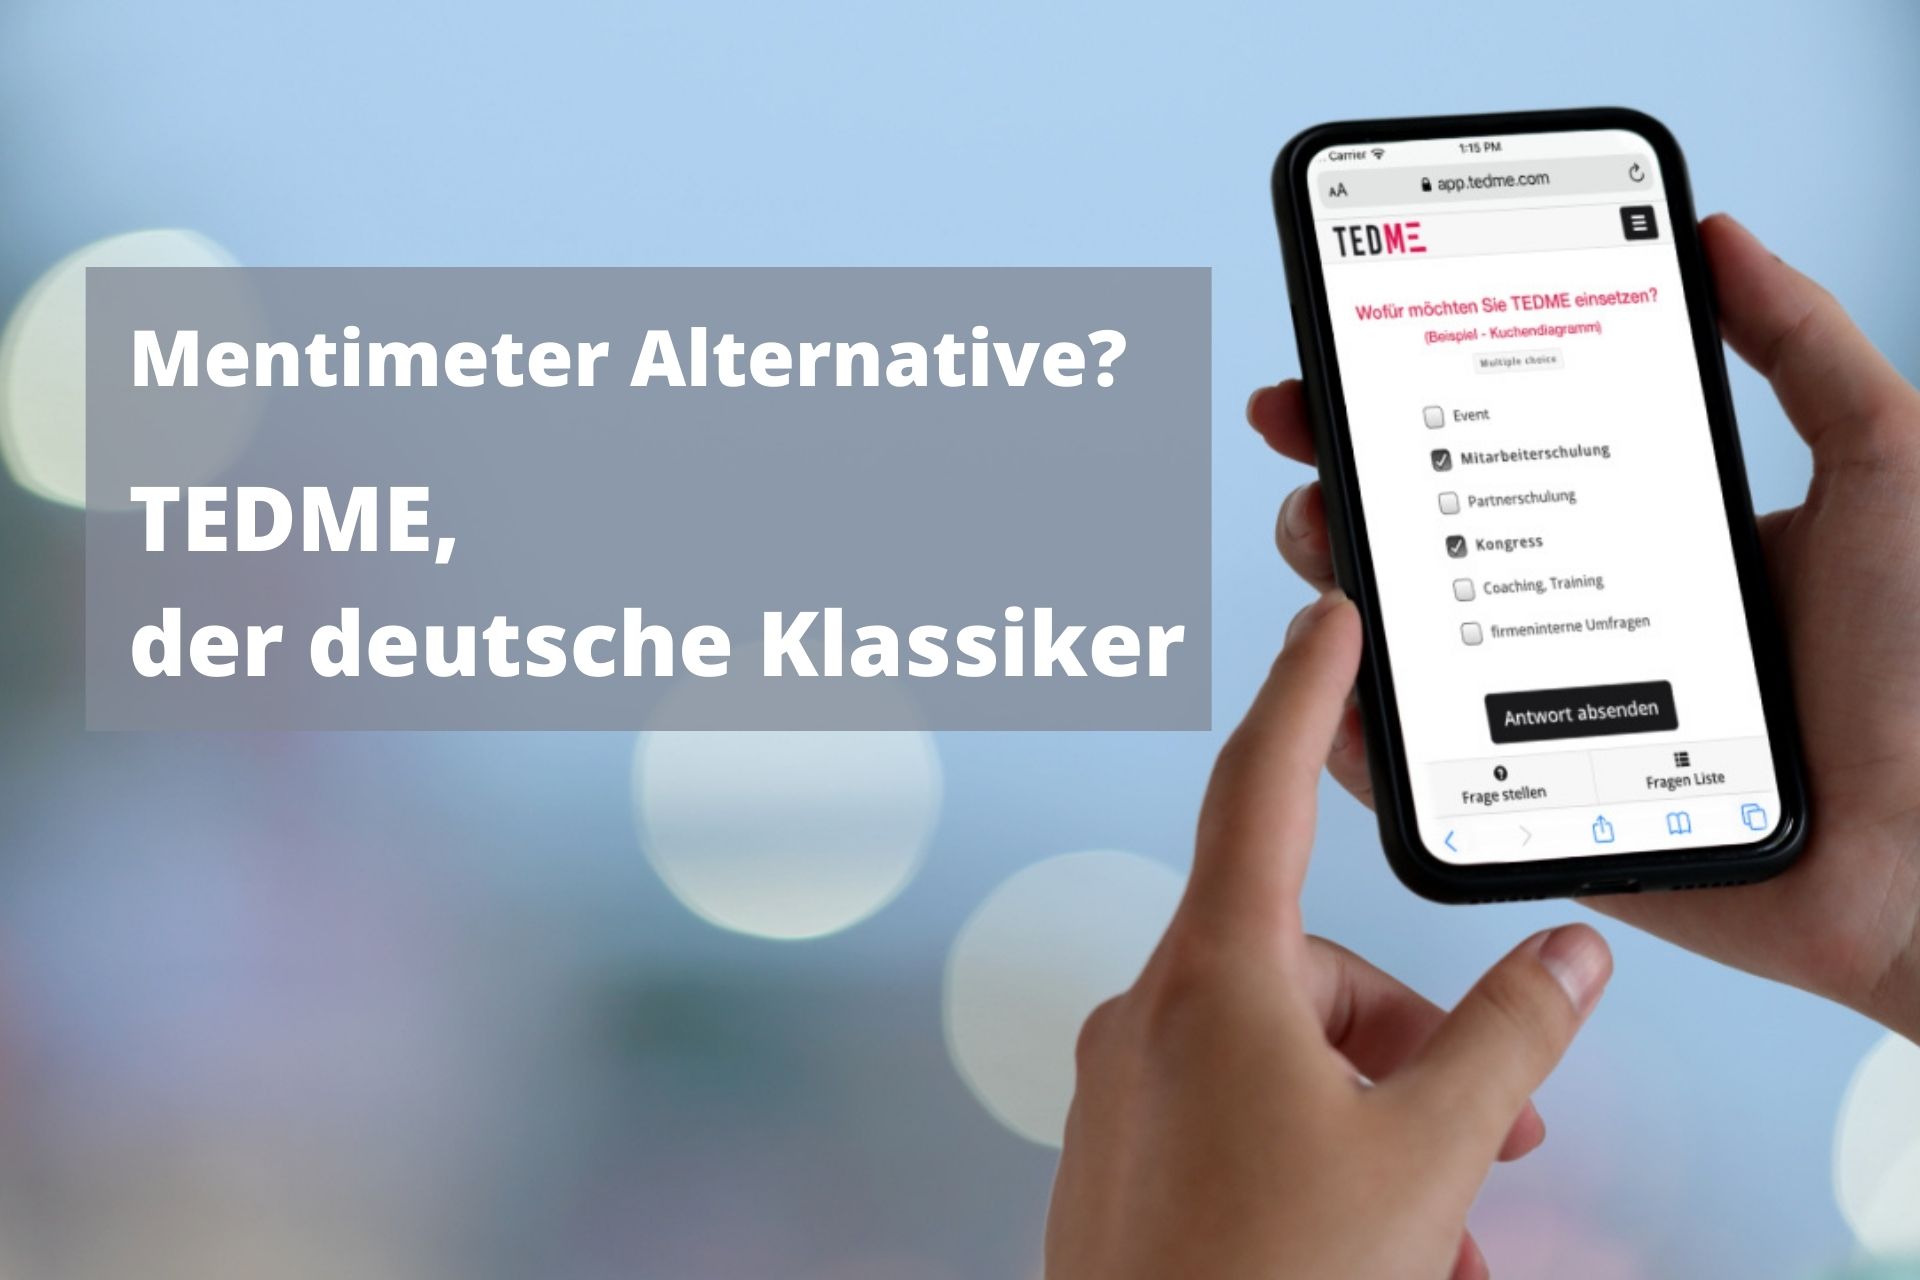 TEDME, der deutsche Klassiker - Mentimeter Alternative